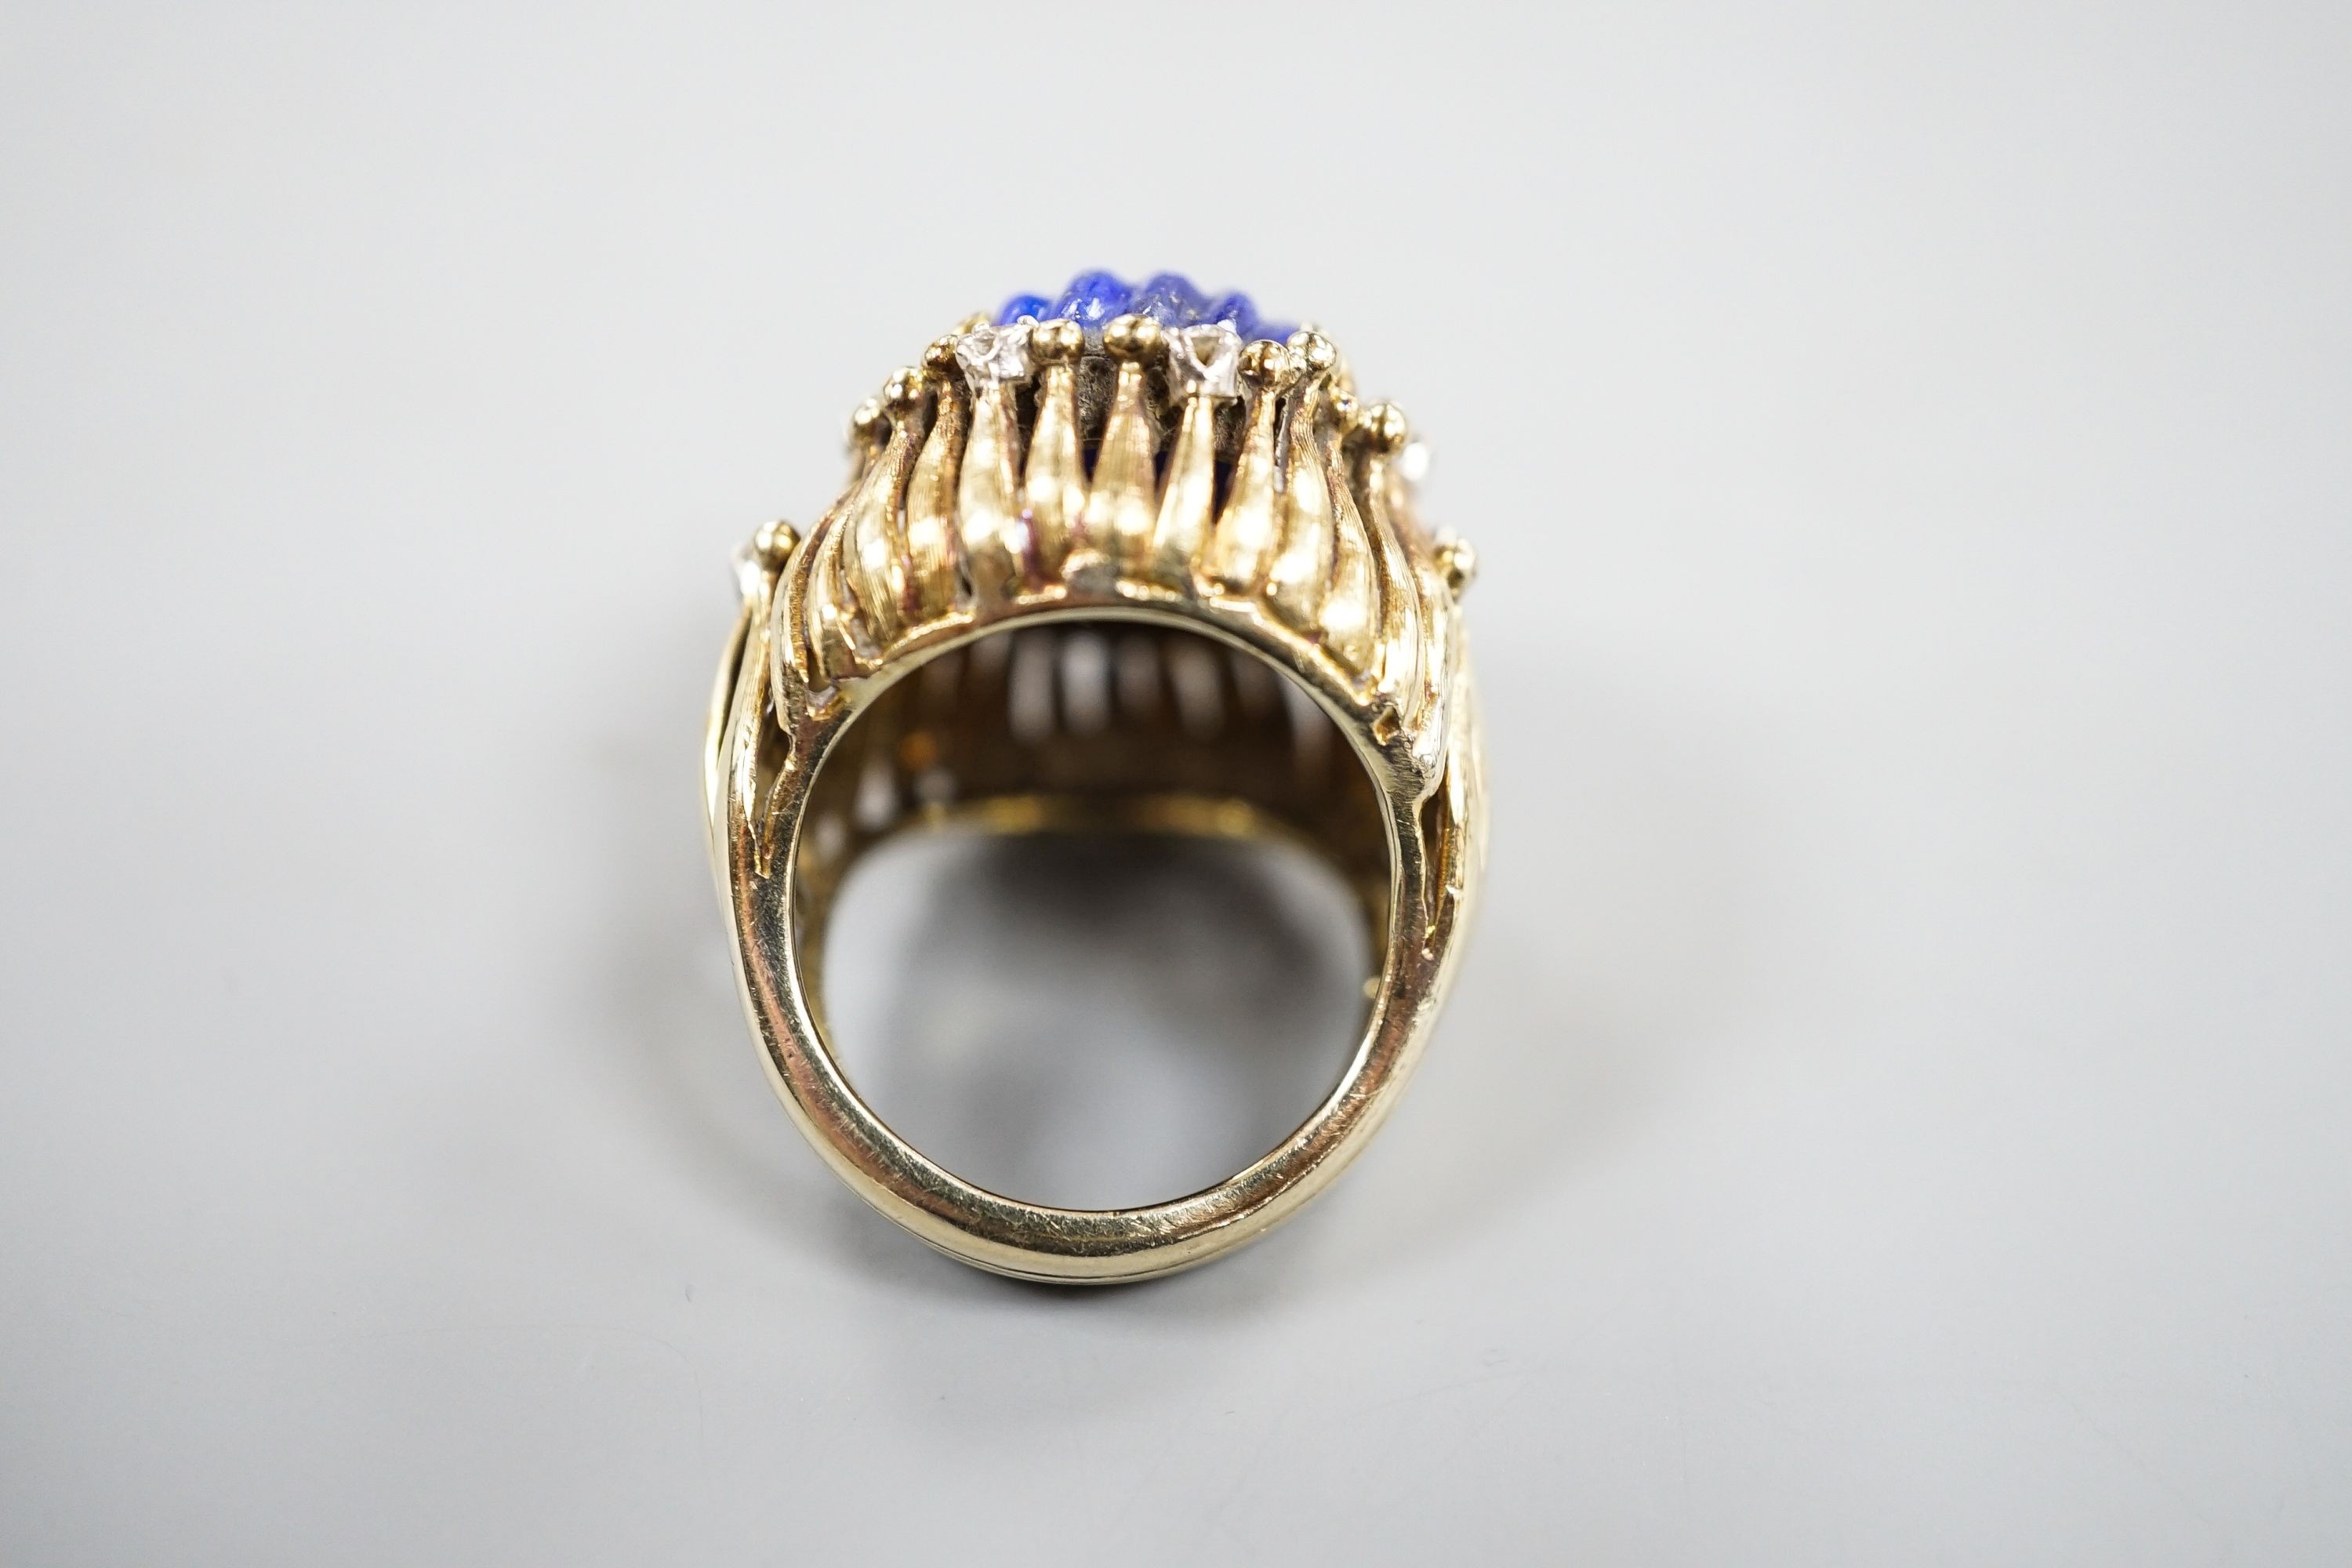 A pierced fluted 14k yellow metal, lapis lazuli and diamond set modernist dress ring, size K/L, gross weight 15.3 grams.